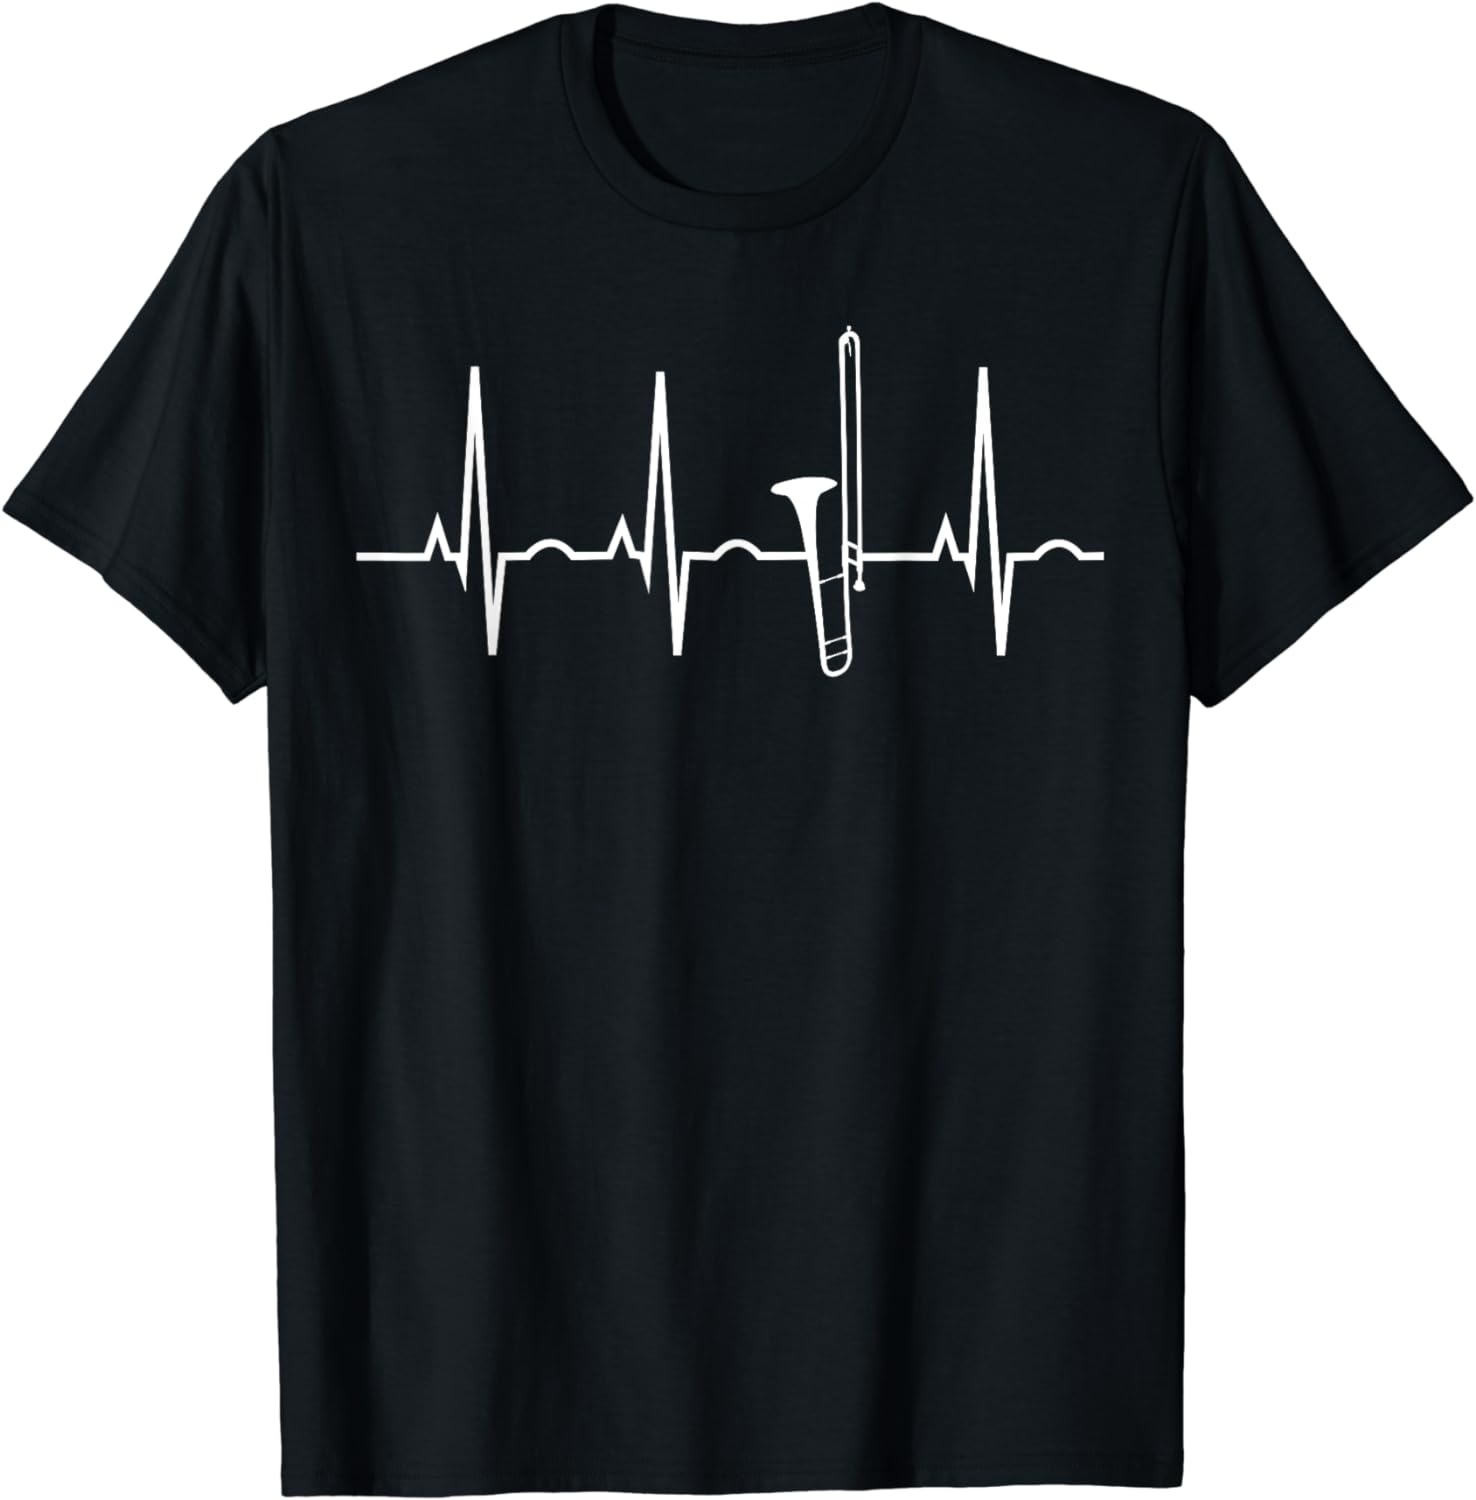 Trombone Player Shirt - Trombone Heartbeat T-Shirt Band Tee - image 1 of 5